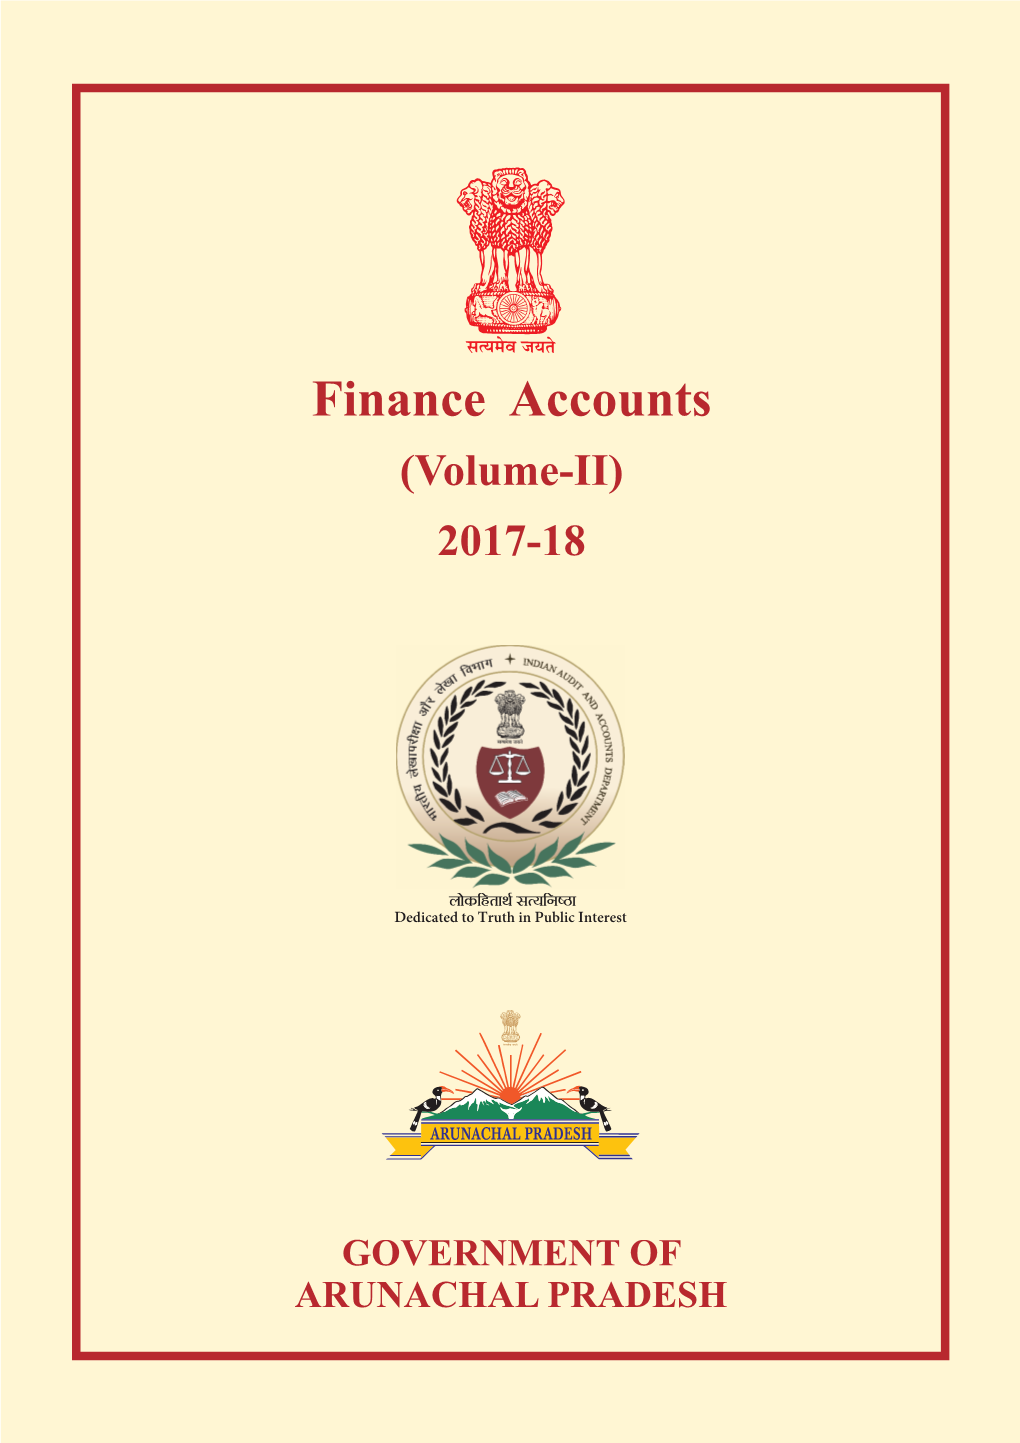 Finance Accounts, Arunachal Pradesh, 2017